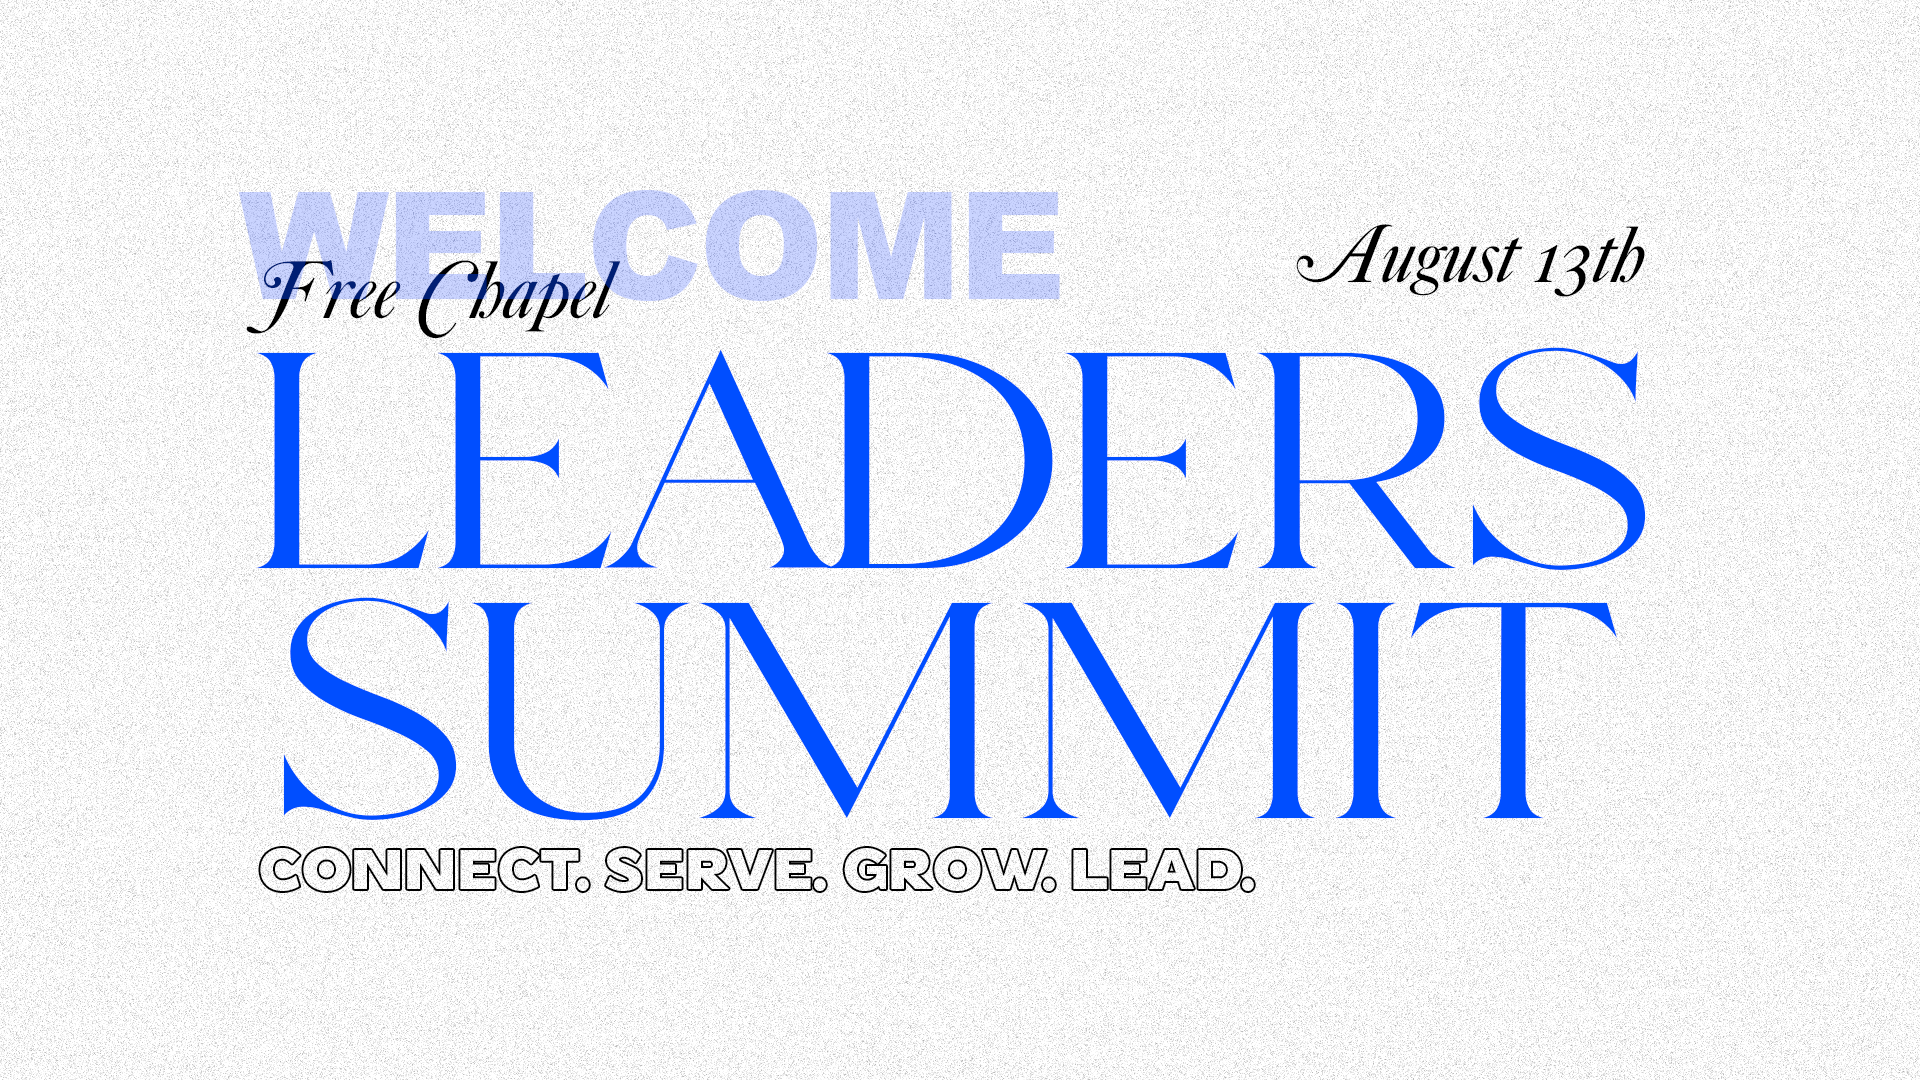 Leaders Summit at the Gwinnett campus